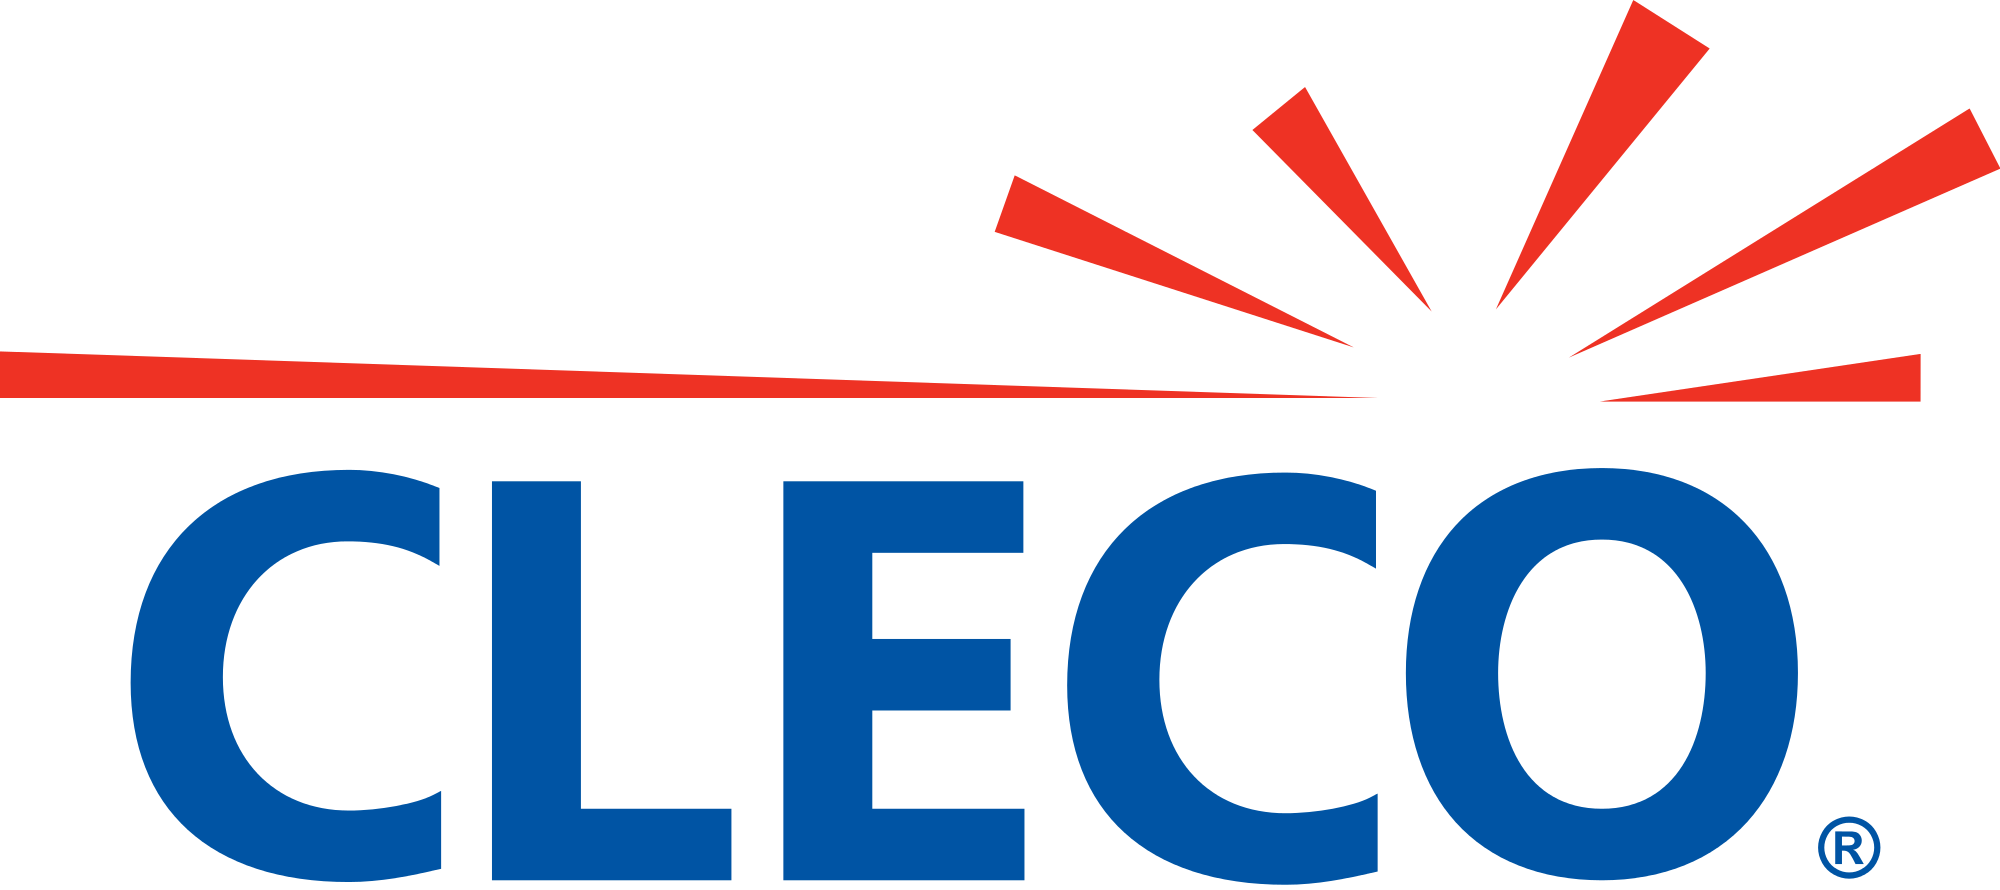 Cleco_Logo.svg.png